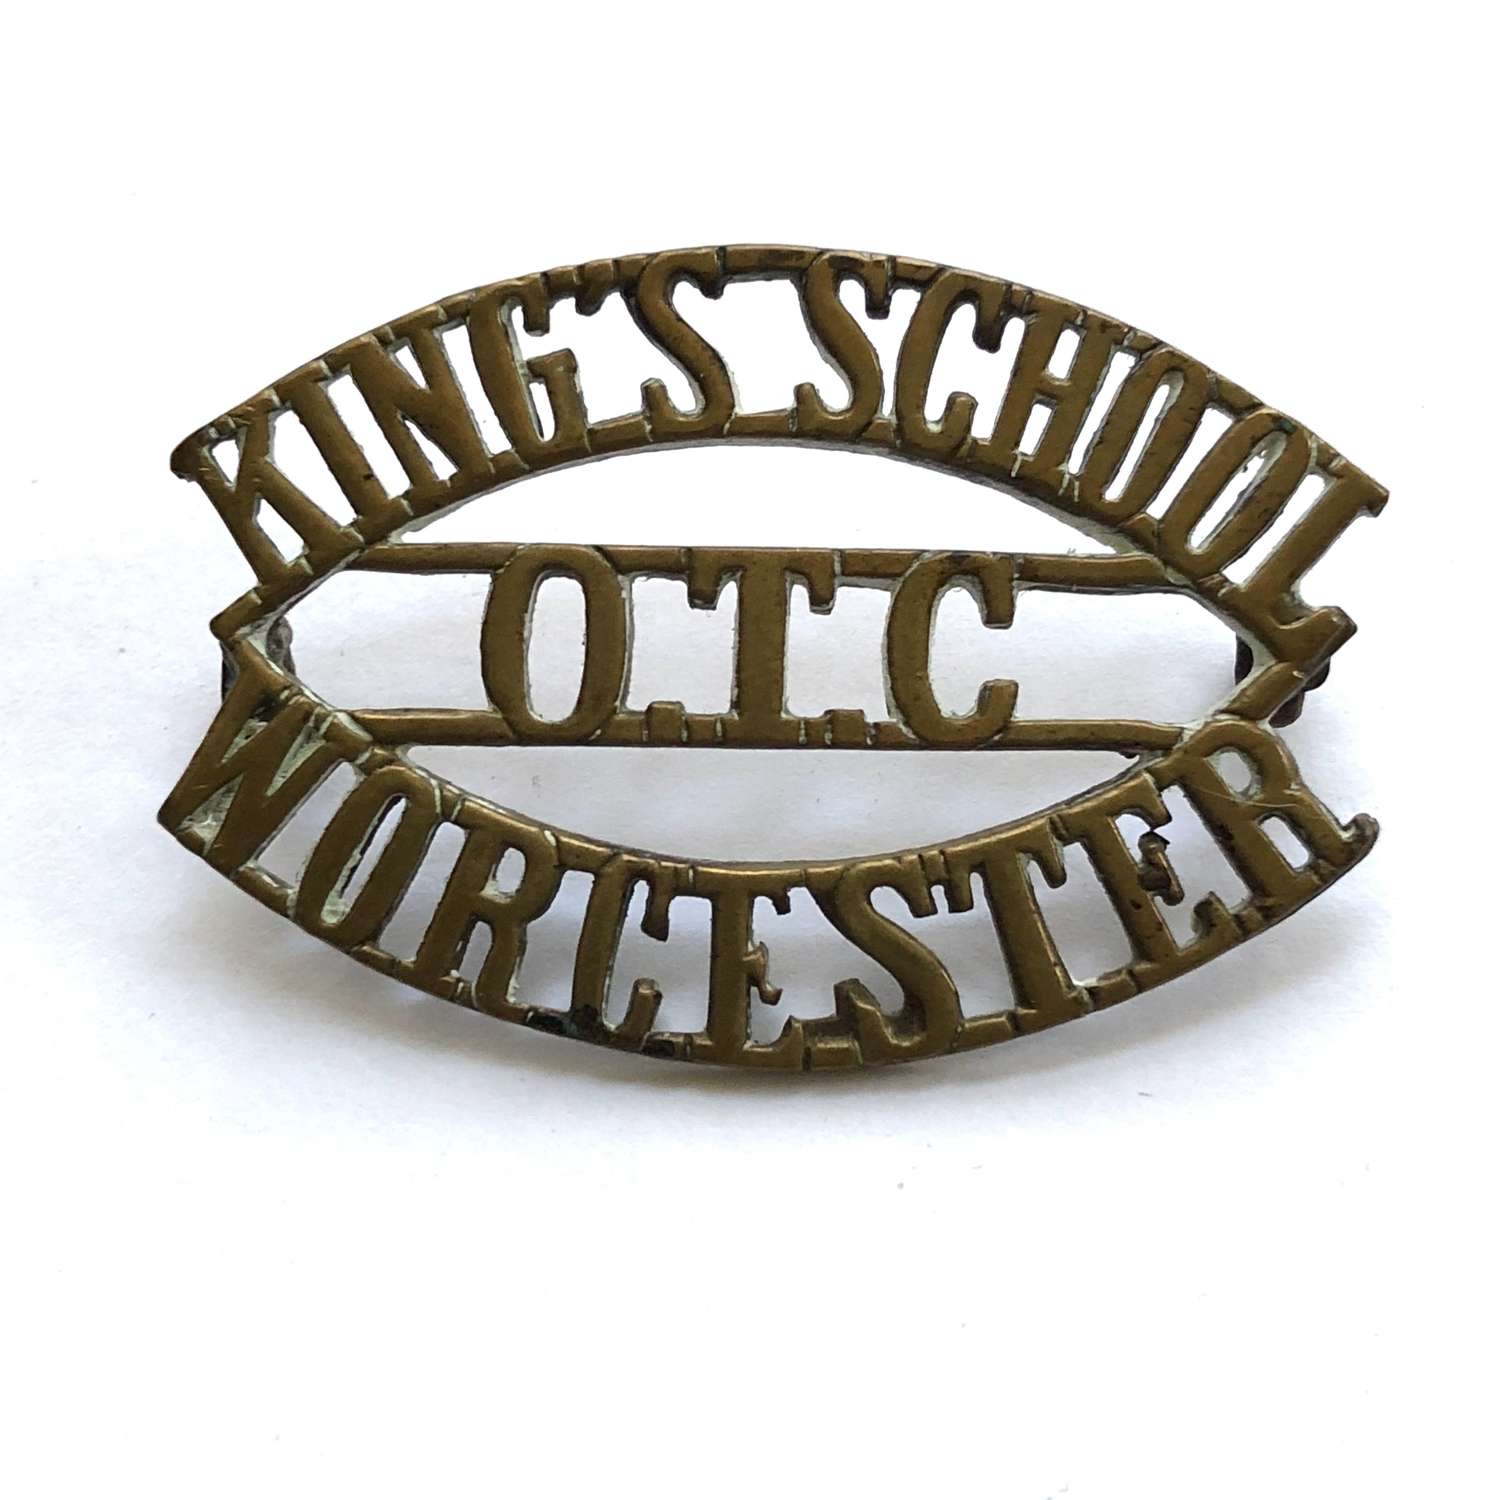 KINGS SCHOOL / OTC / WORCESTER shoulder title circa 1908-40